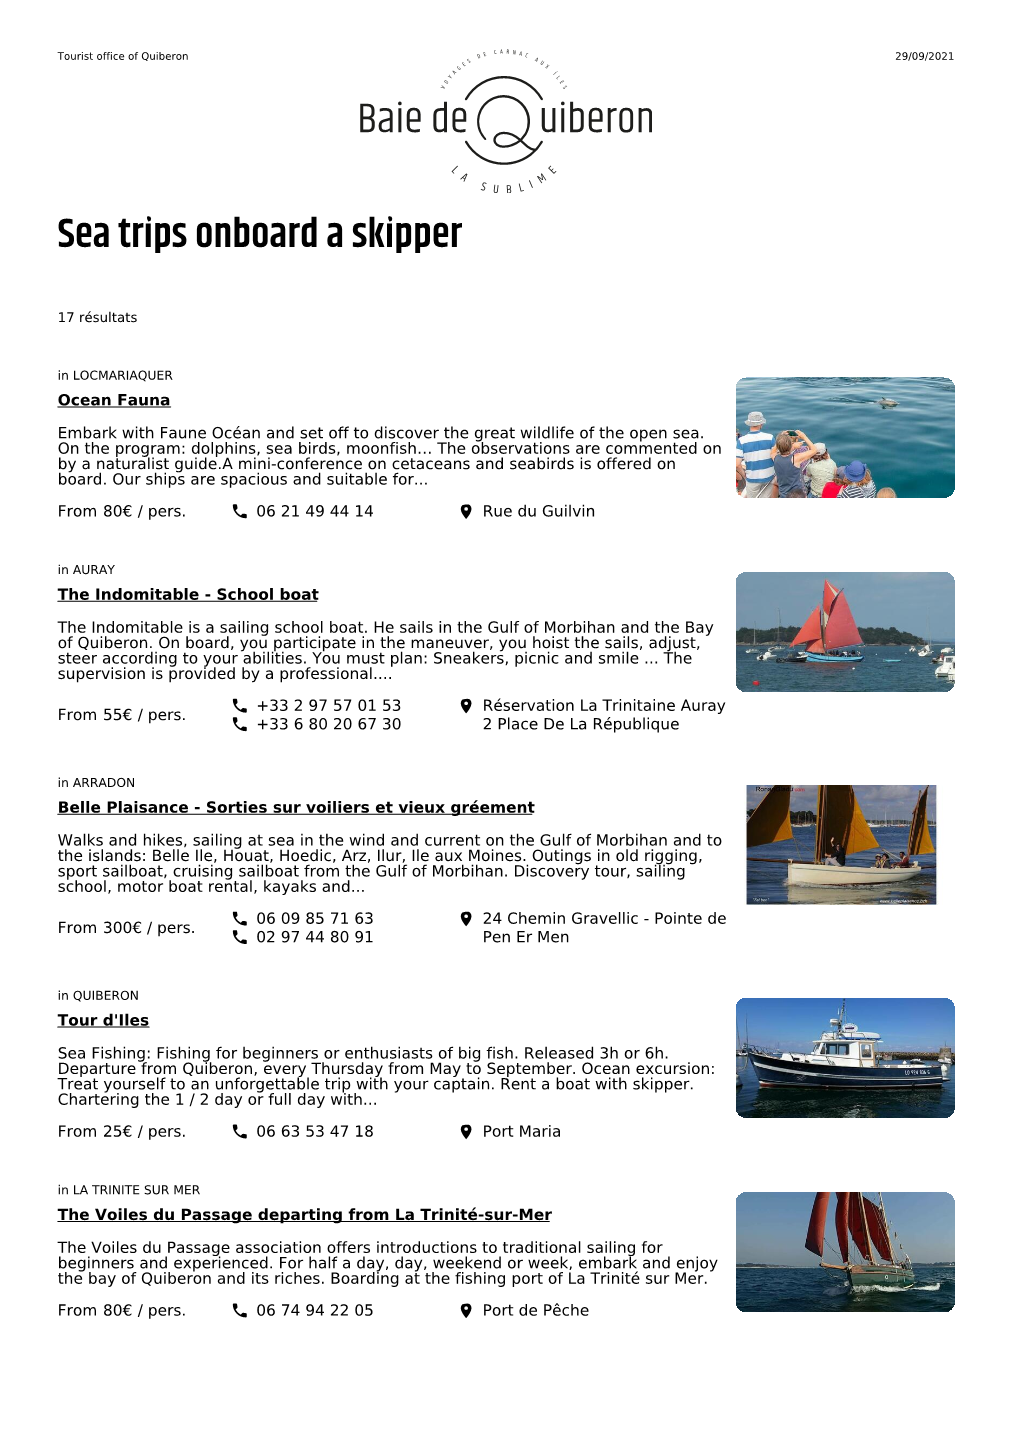 Sea Trips Onboard a Skipper